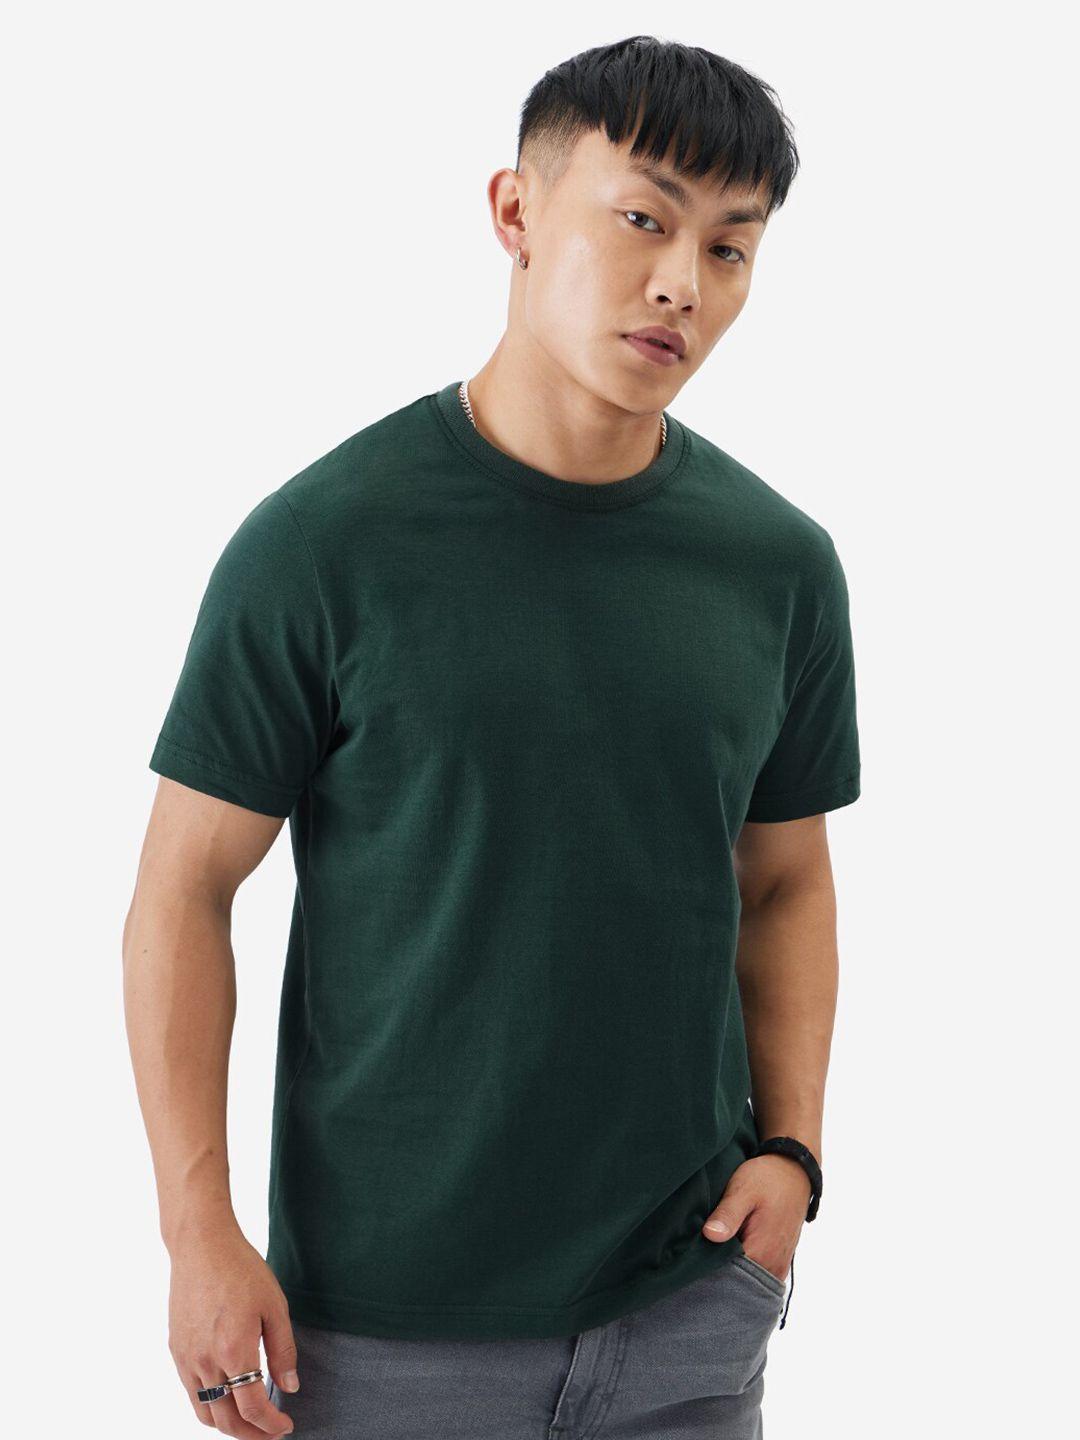 the souled store men green t-shirt